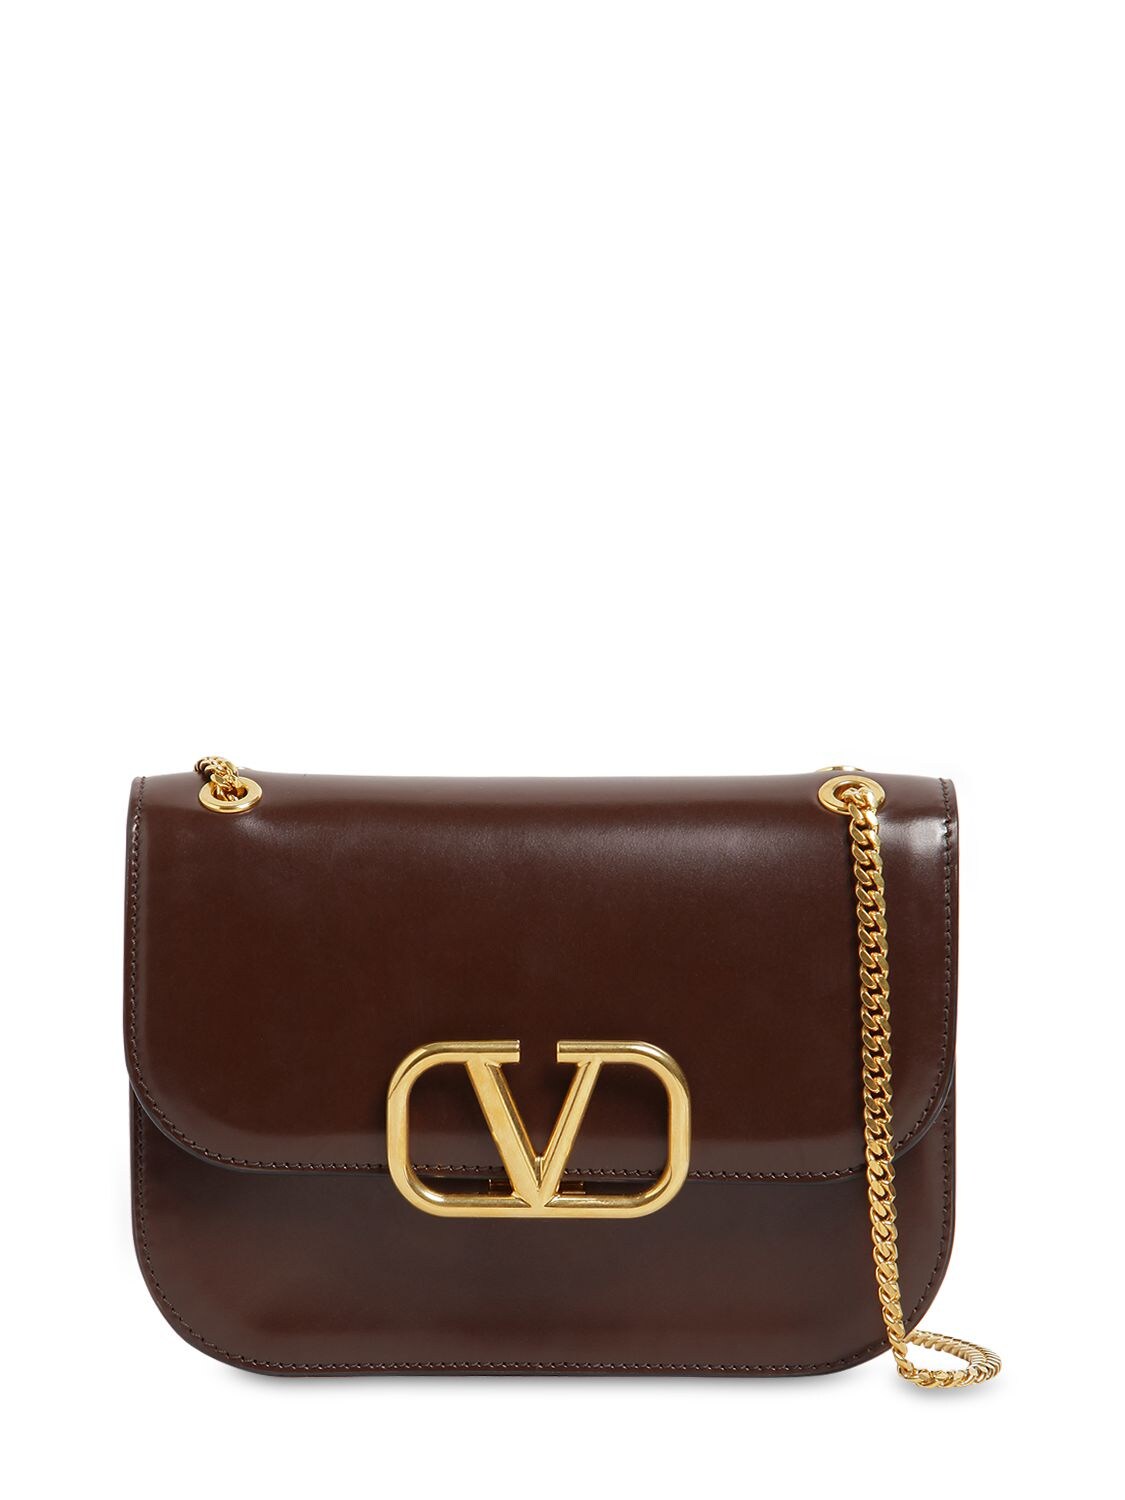 Valentino Garavani Vlock Small Leather Shoulder Bag In Fondant